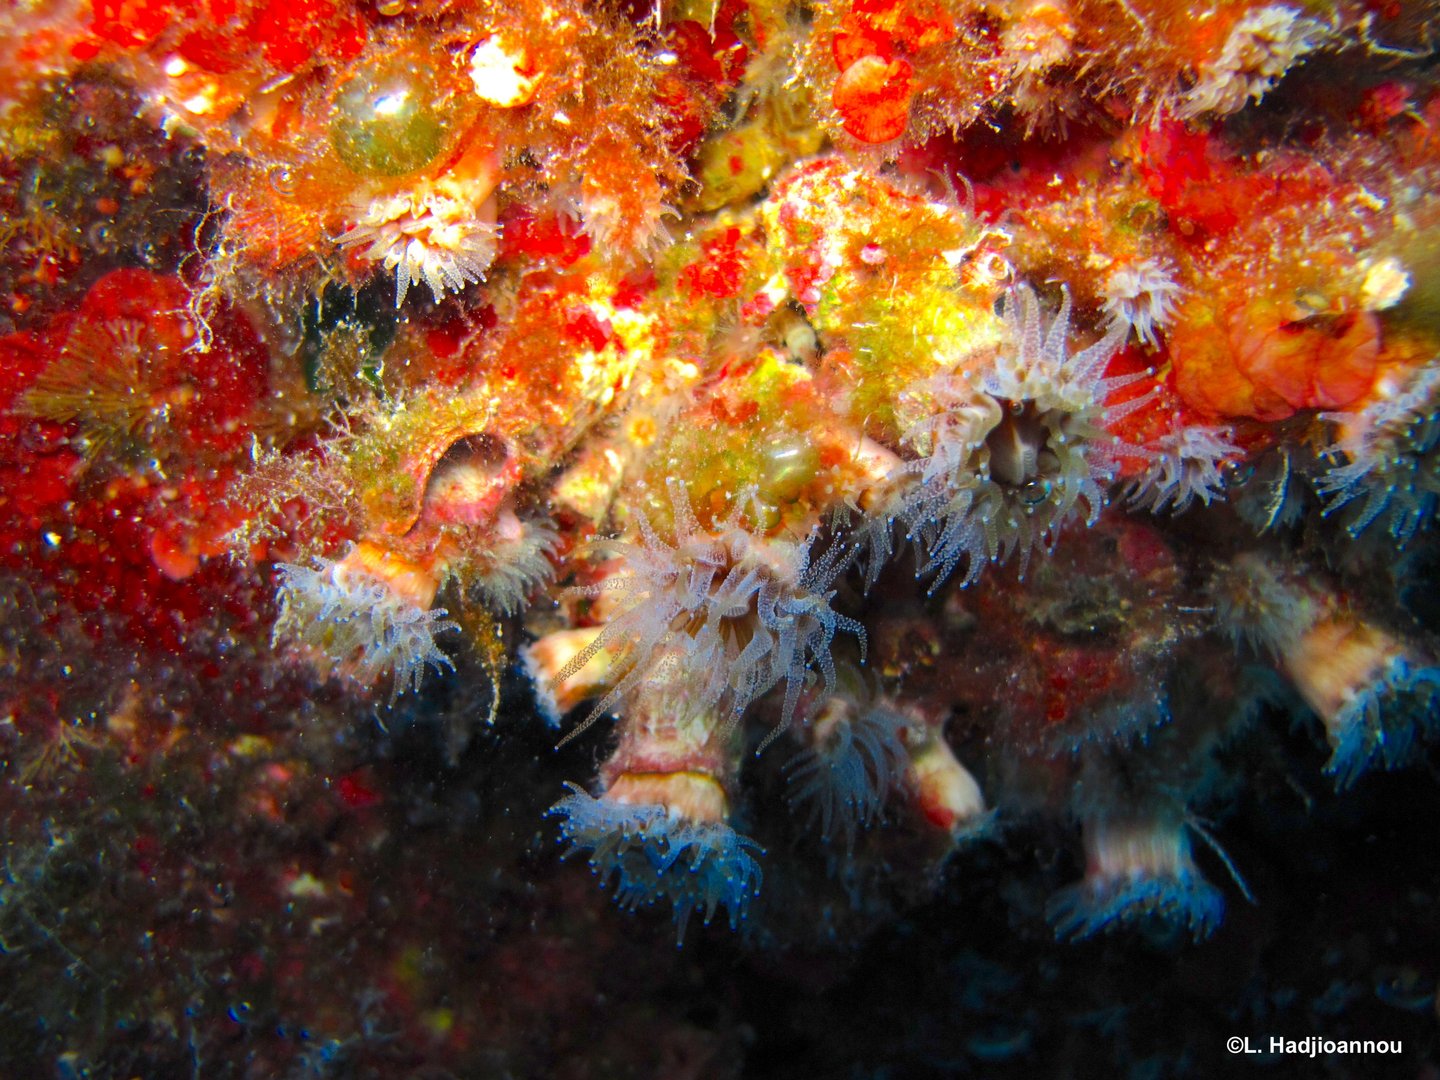 image Cyprus’ coral reefs under threat